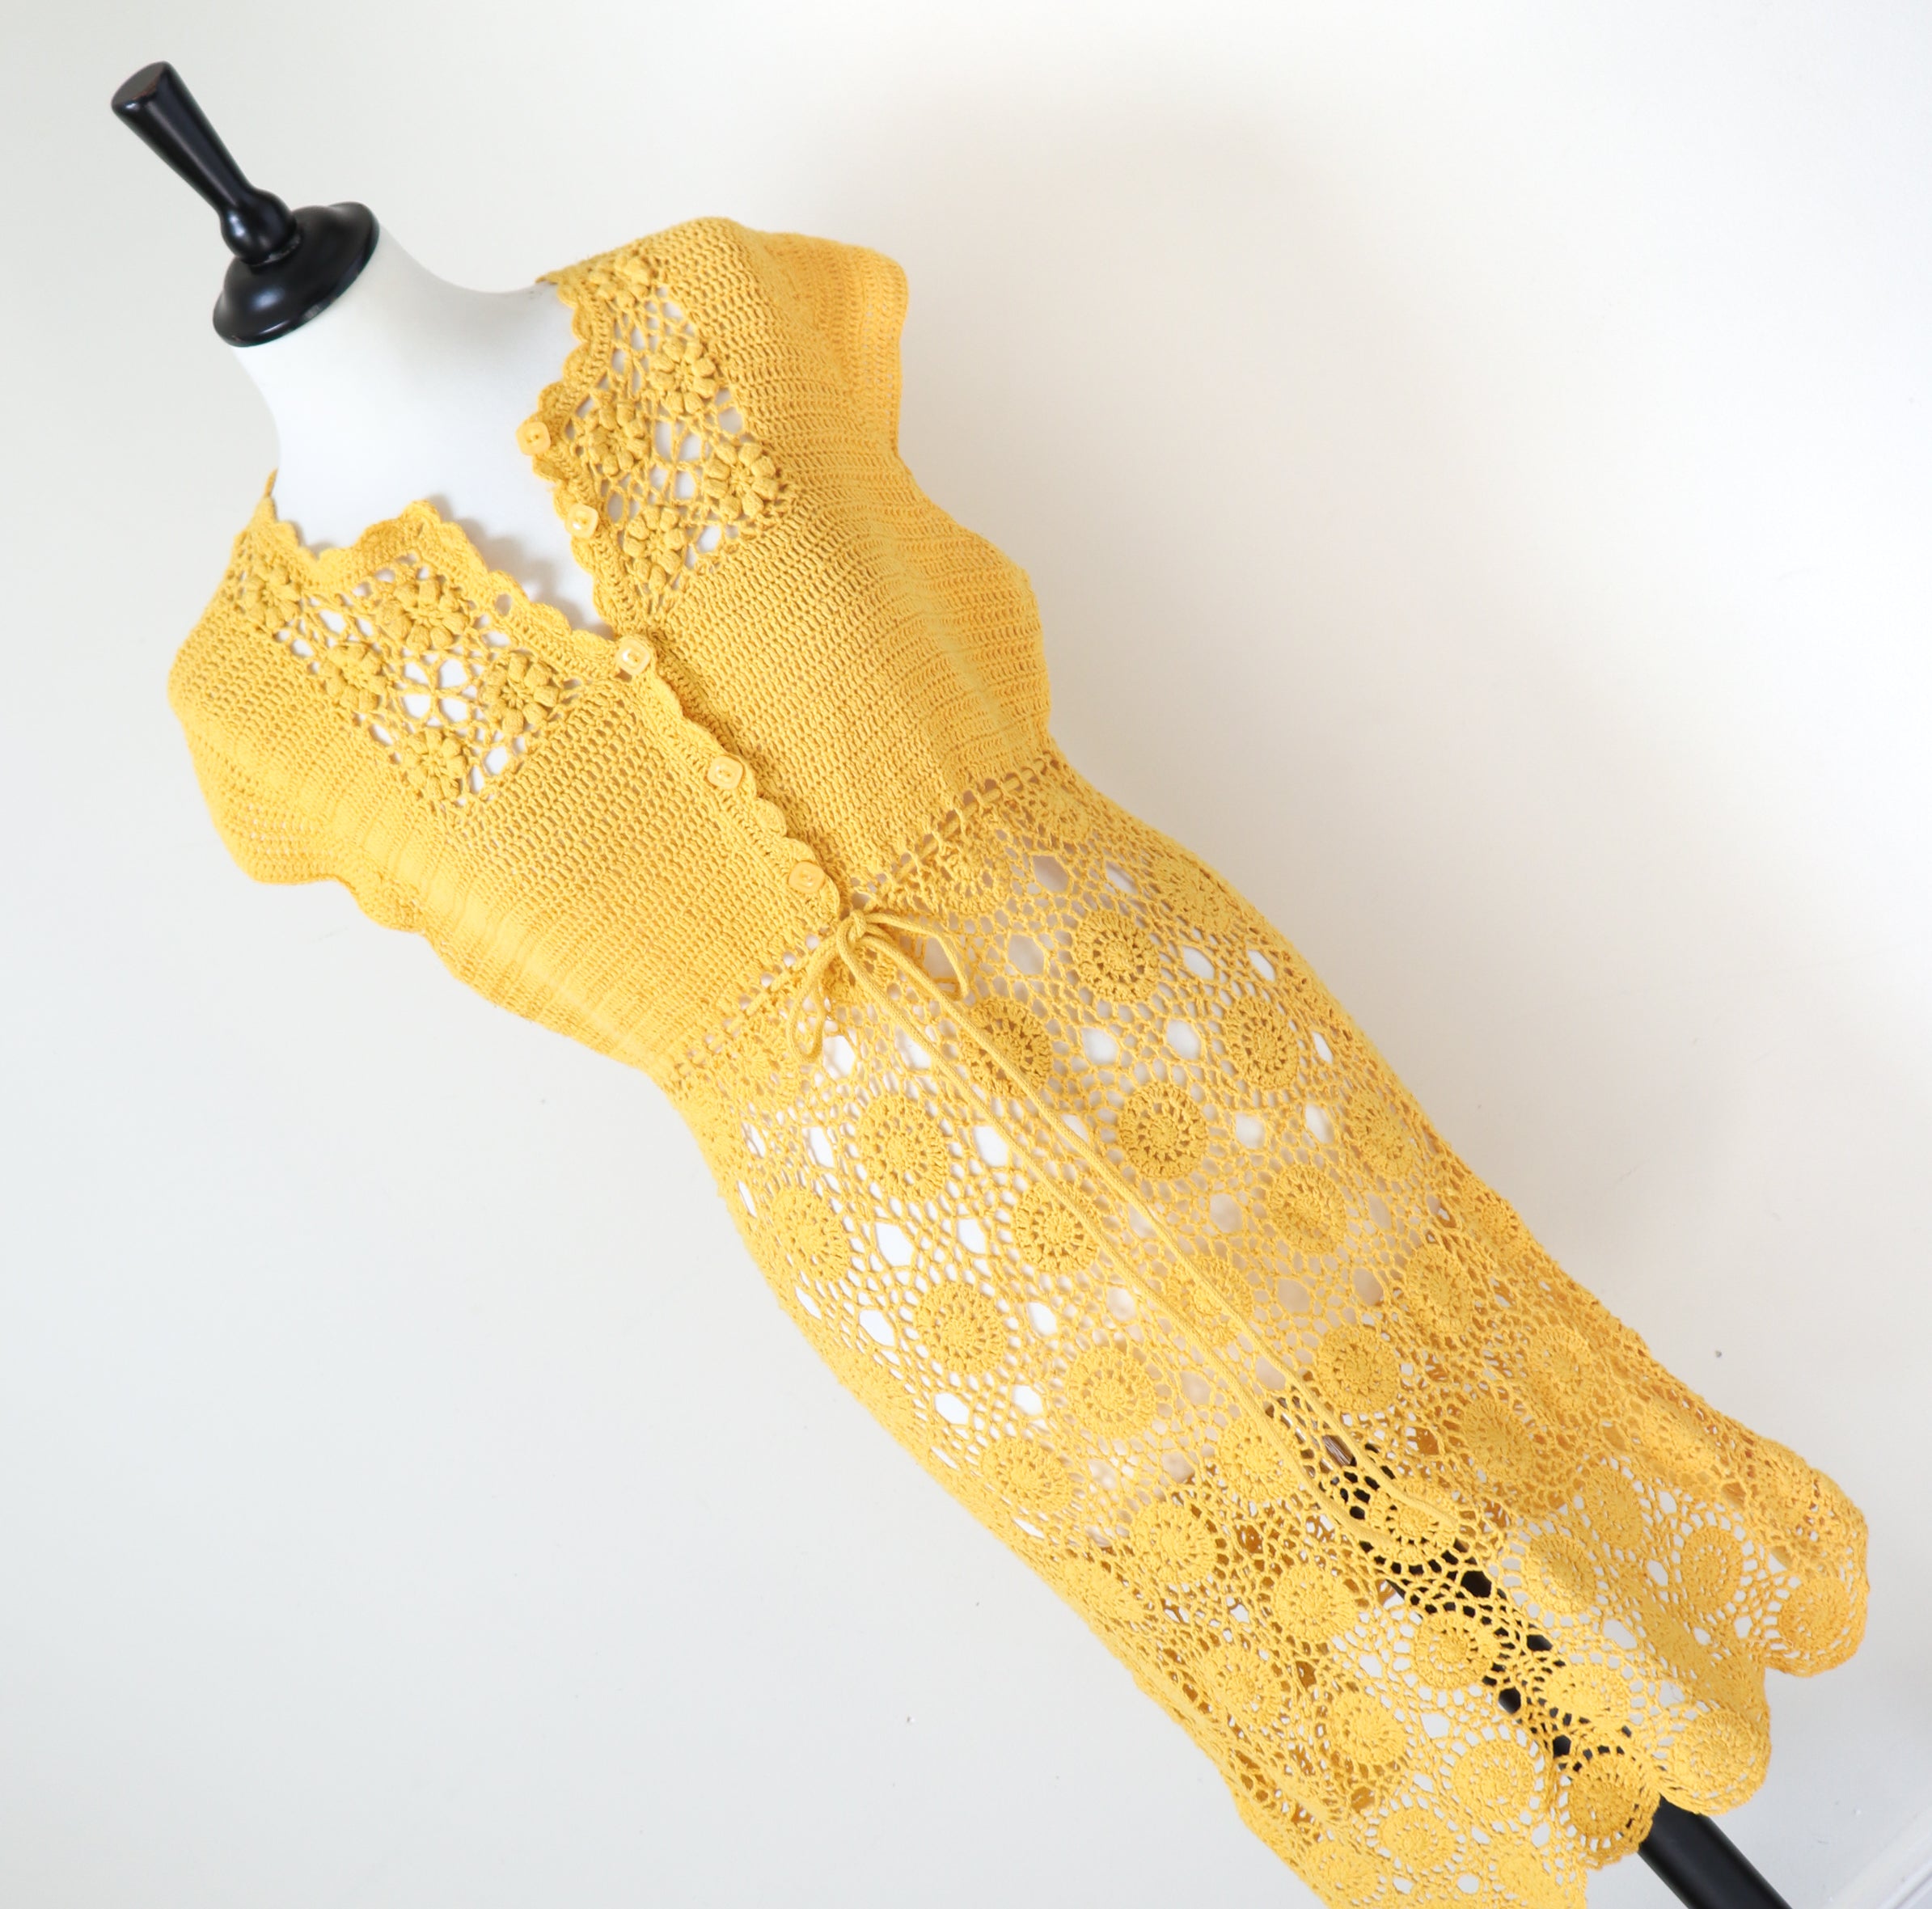 Crochet Knit Vintage Dress - Yellow - Fit S / UK 10